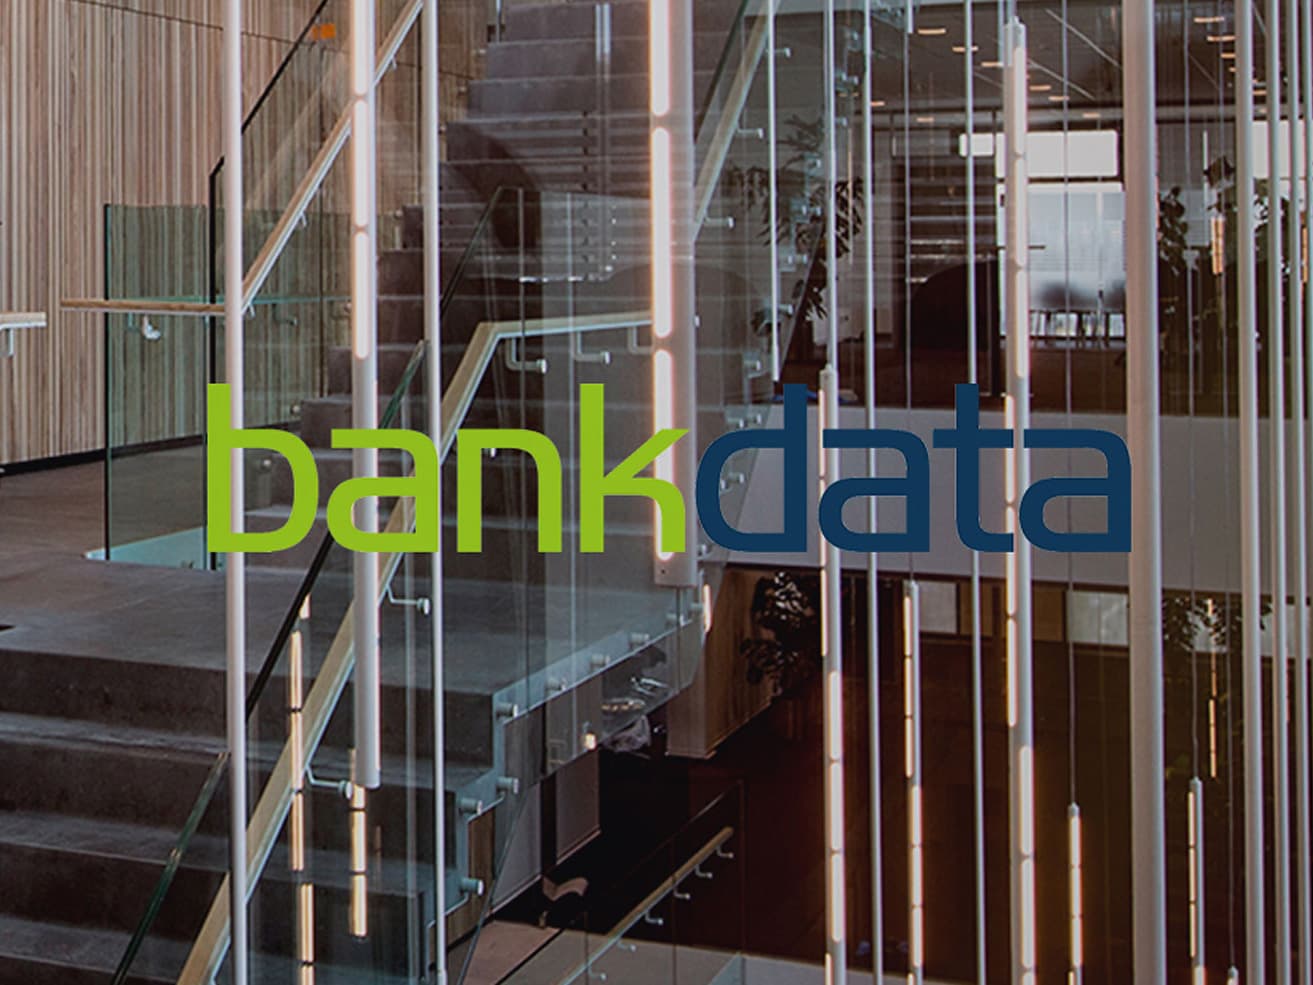 Bankdata – OpenShift